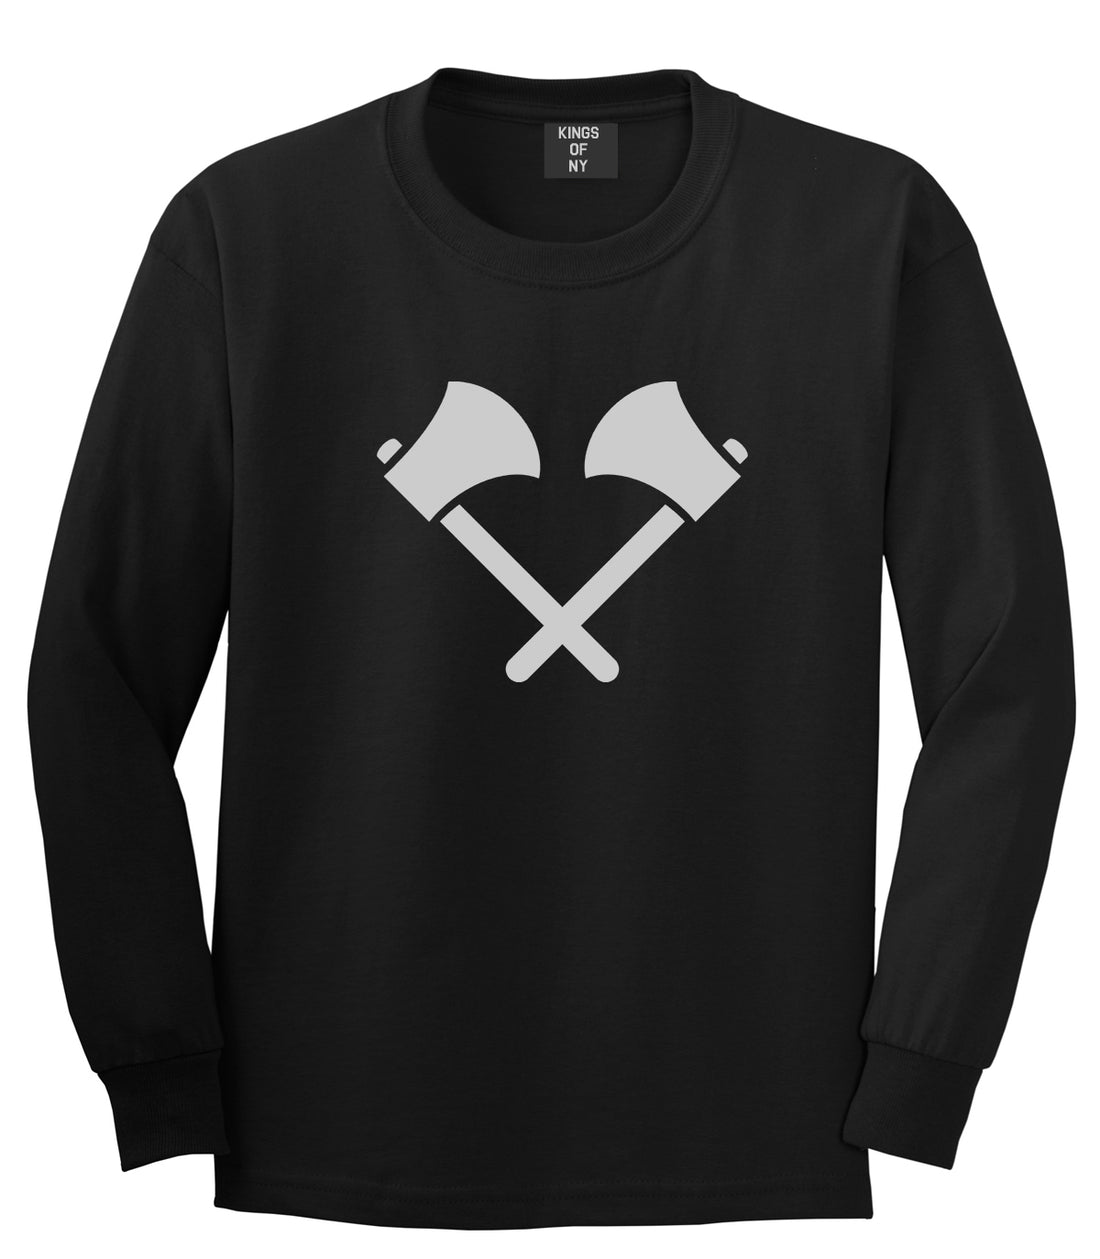 2 Ax Fireman Logo Black Long Sleeve T-Shirt by Kings Of NY